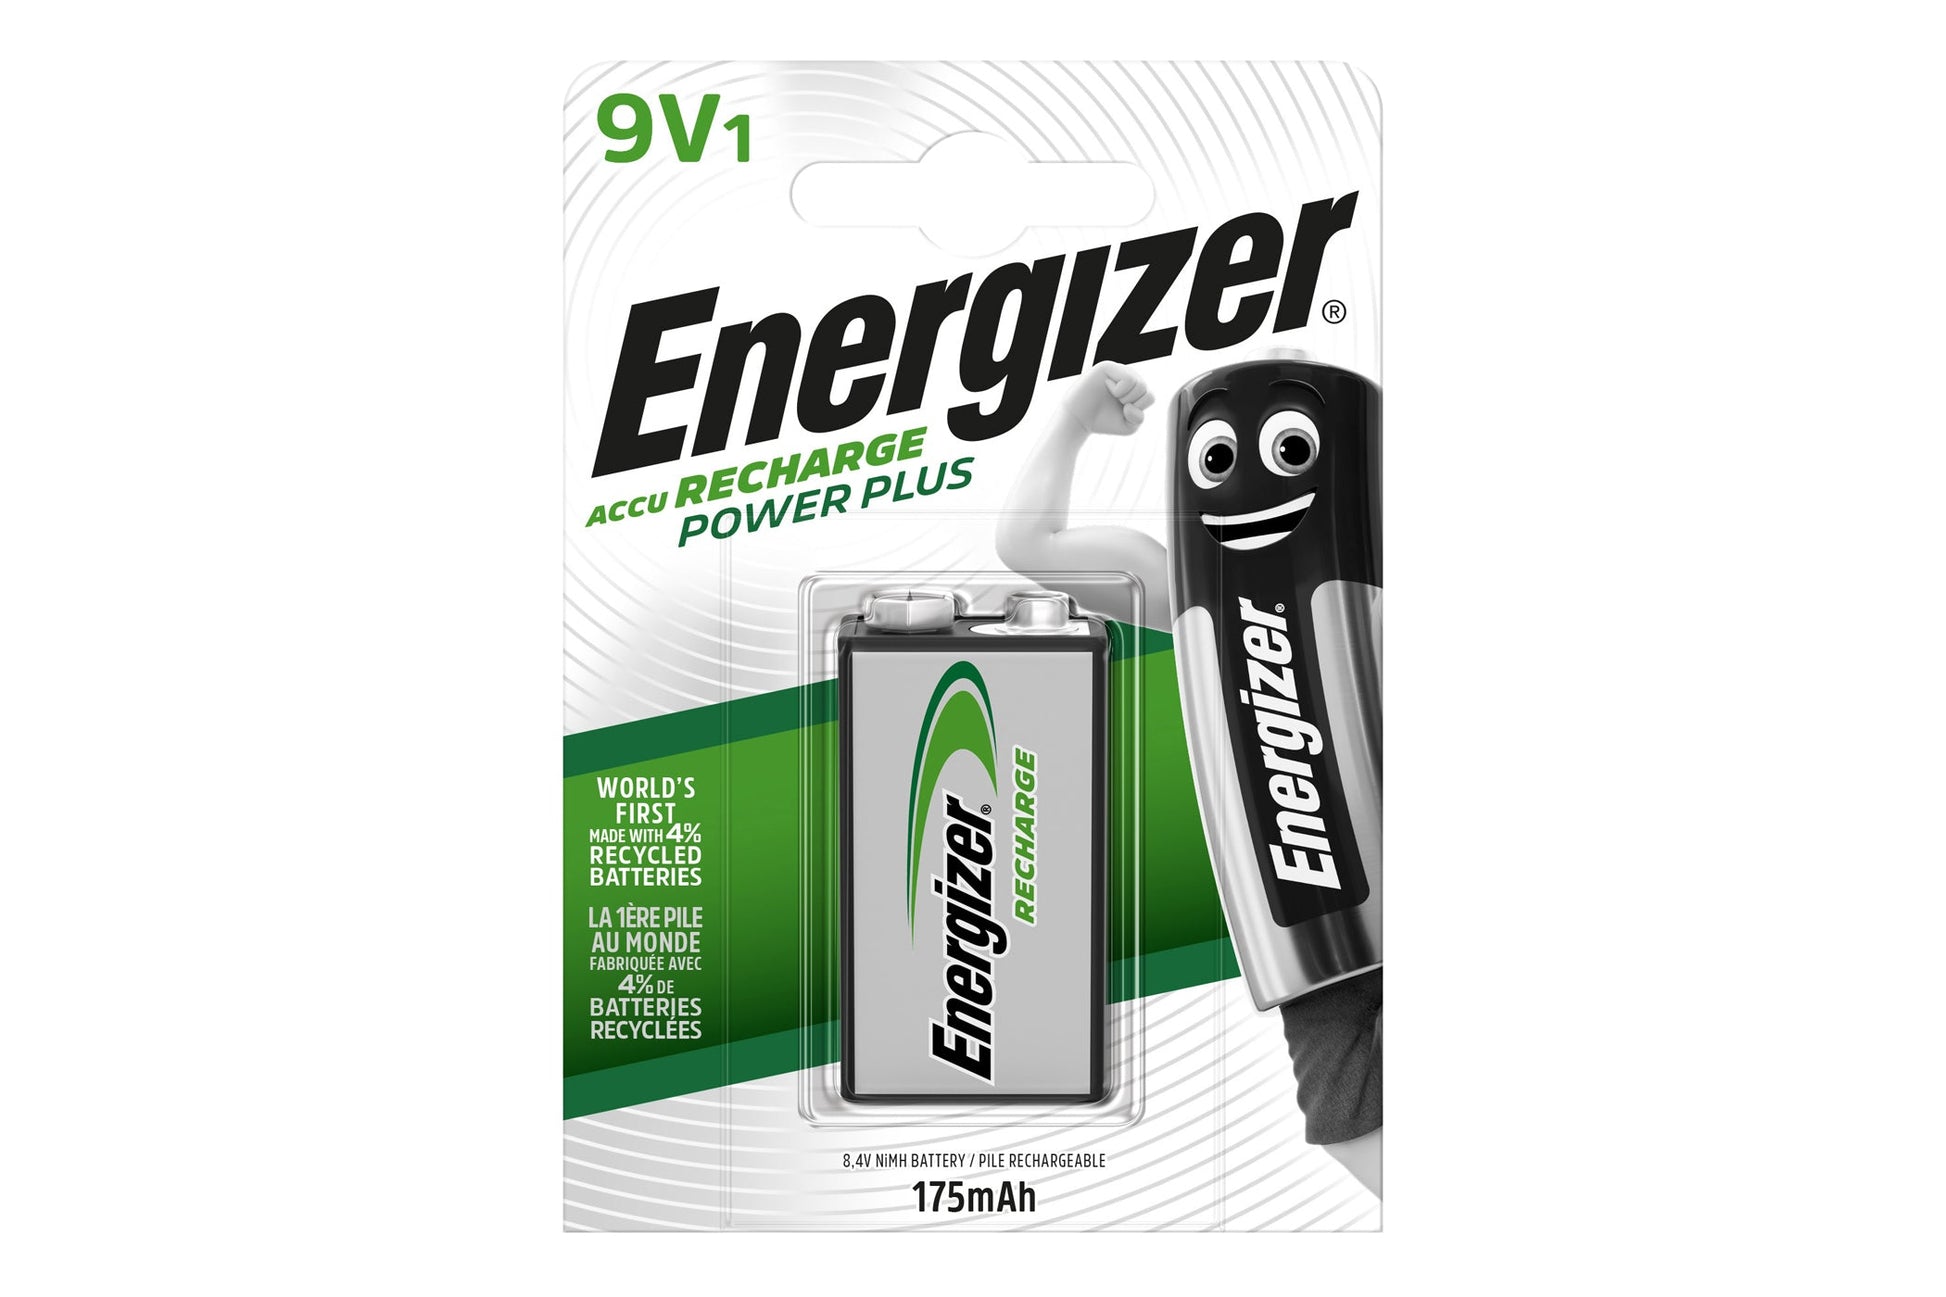 Energizer 9V 175mAh Recharge Power Plus Battery - maplin.co.uk